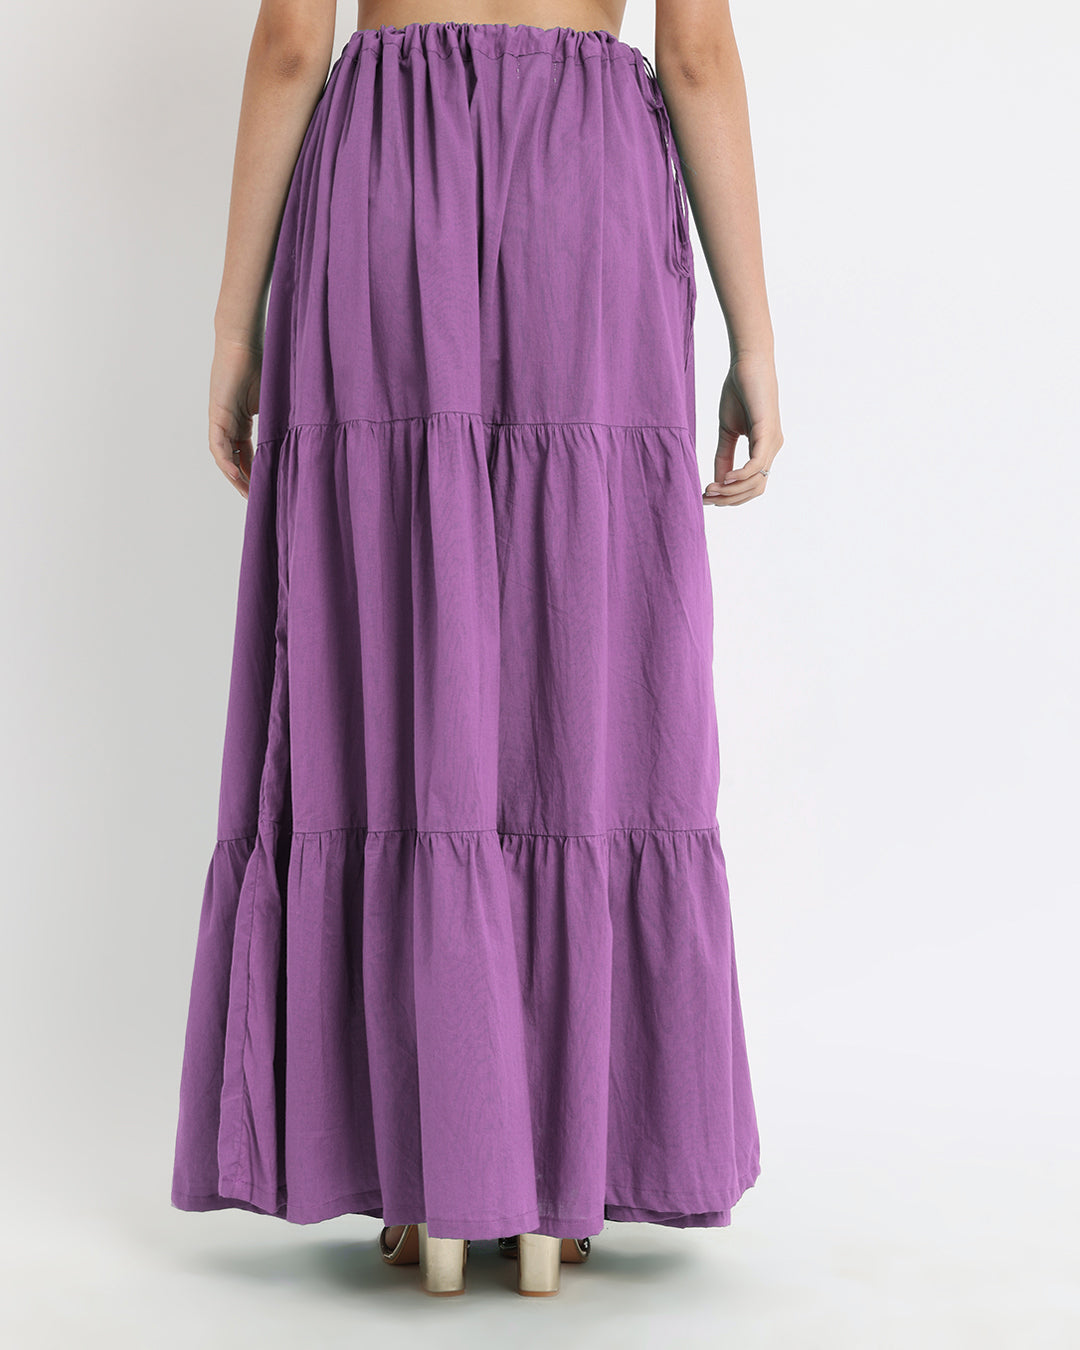 Wisteria Purple Tiered Skirt